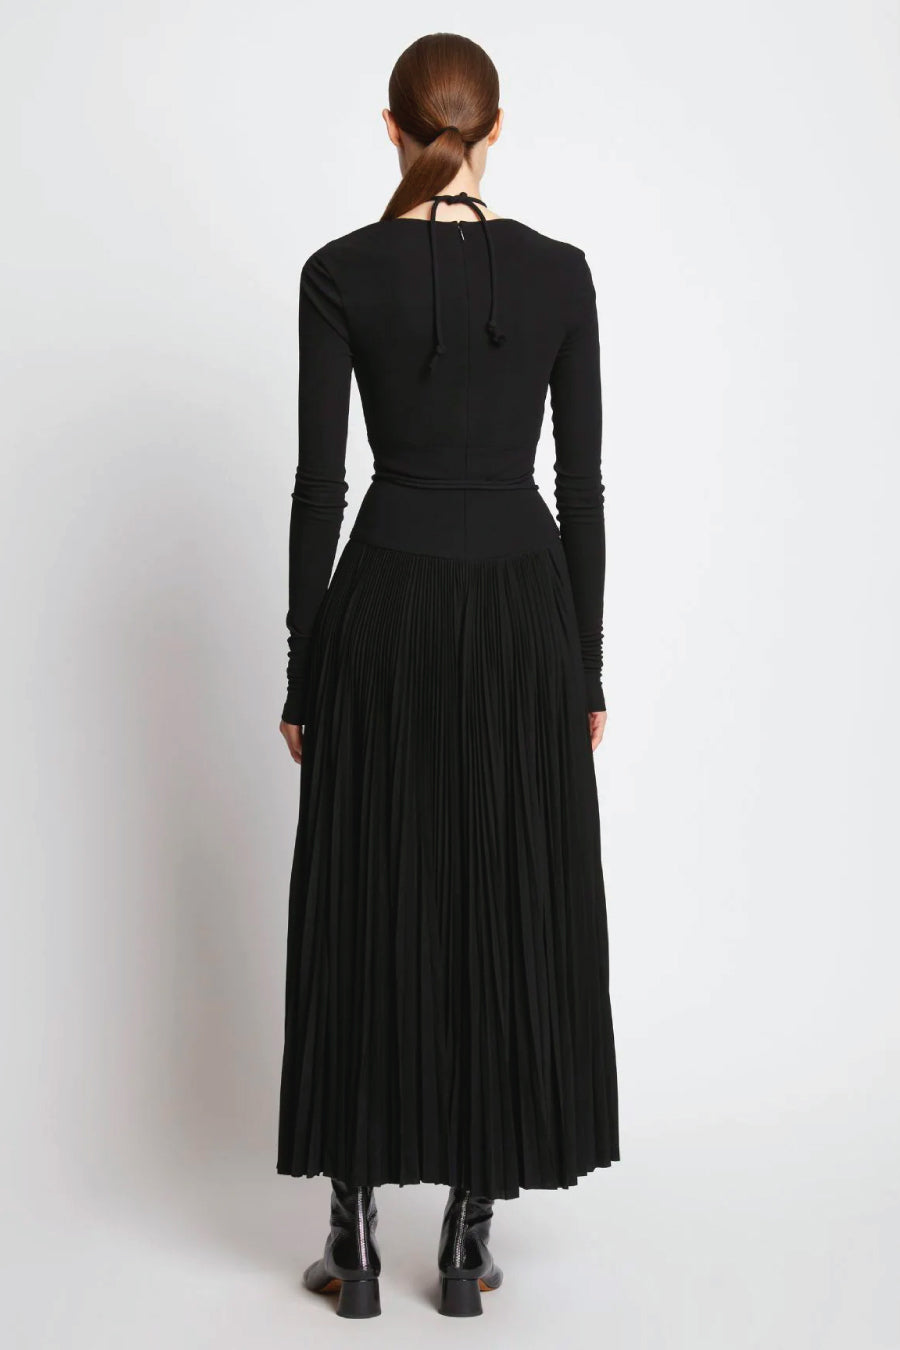 Proenza Schouler Pleated Matte Jersey Halter Dress - Black